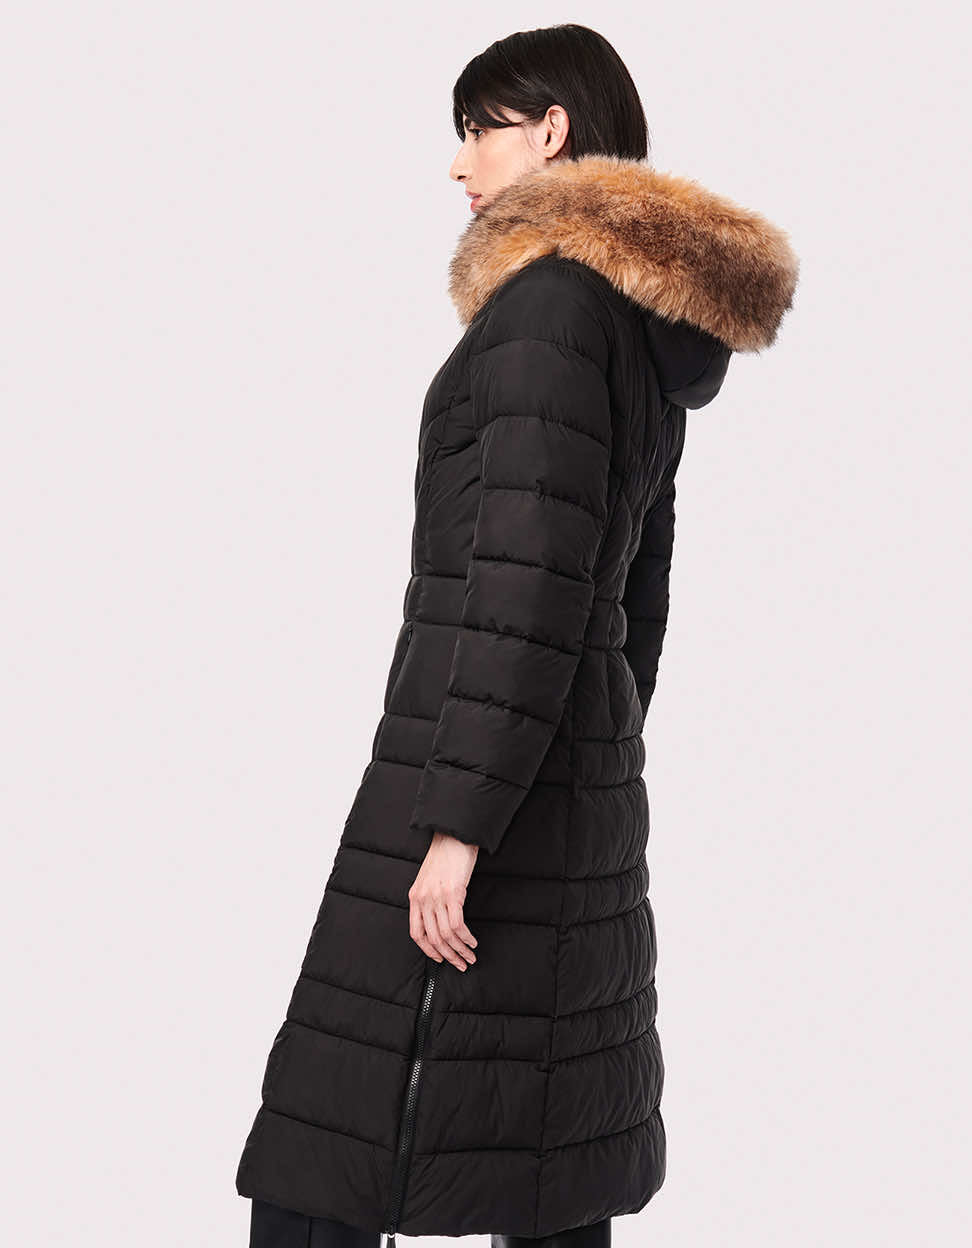 Park City Vegan Fur Trim Puffer Jacket - Black - Bernardo